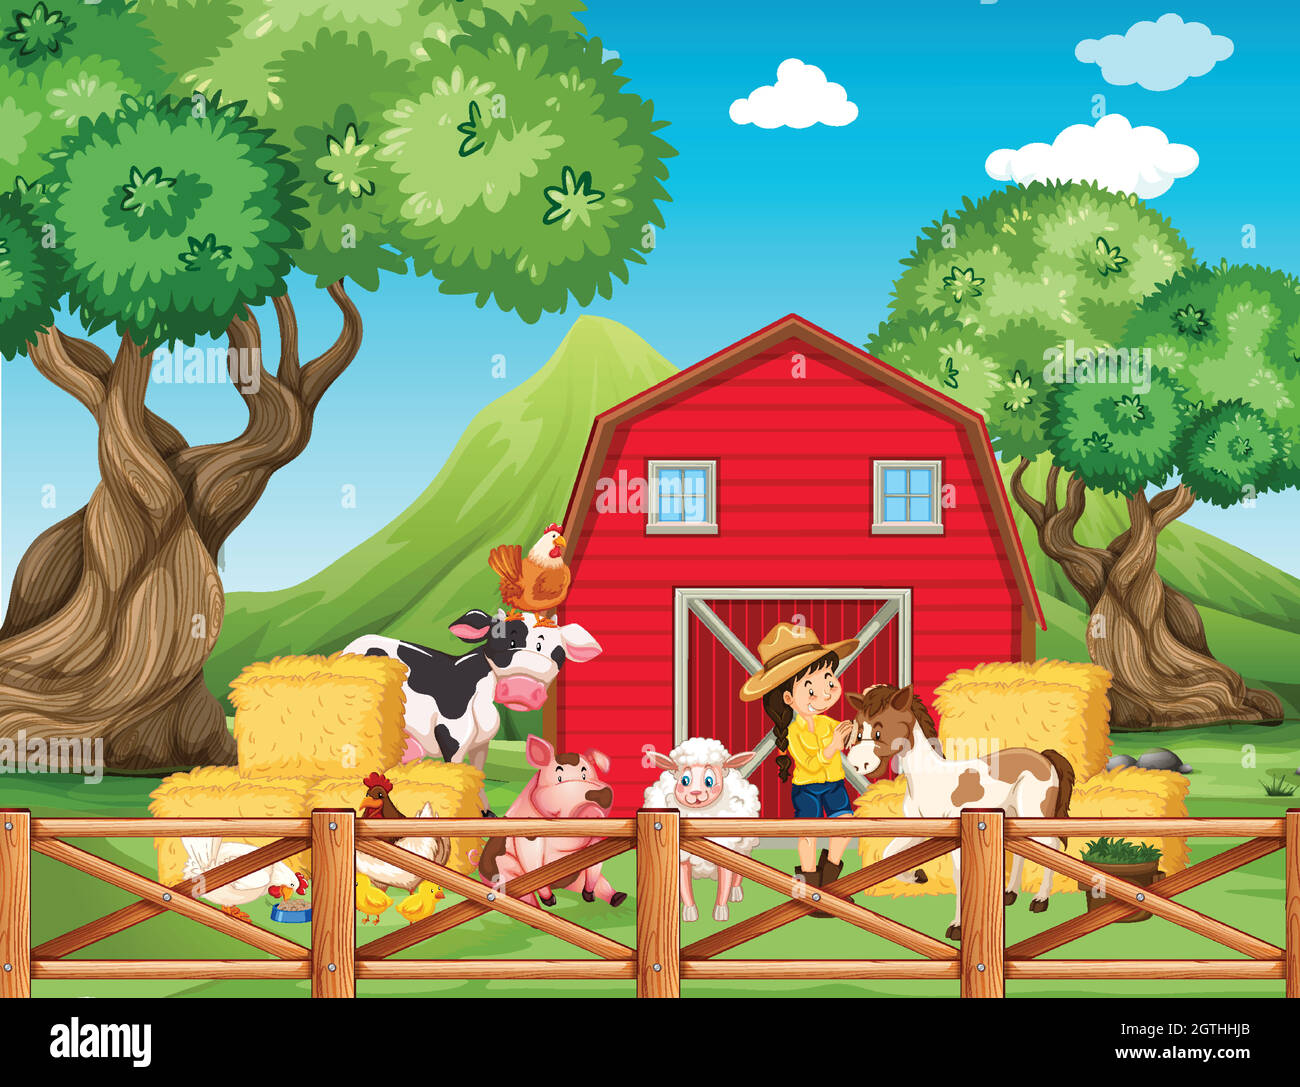 Farm scene with girl and animals on the farm Stock Vector